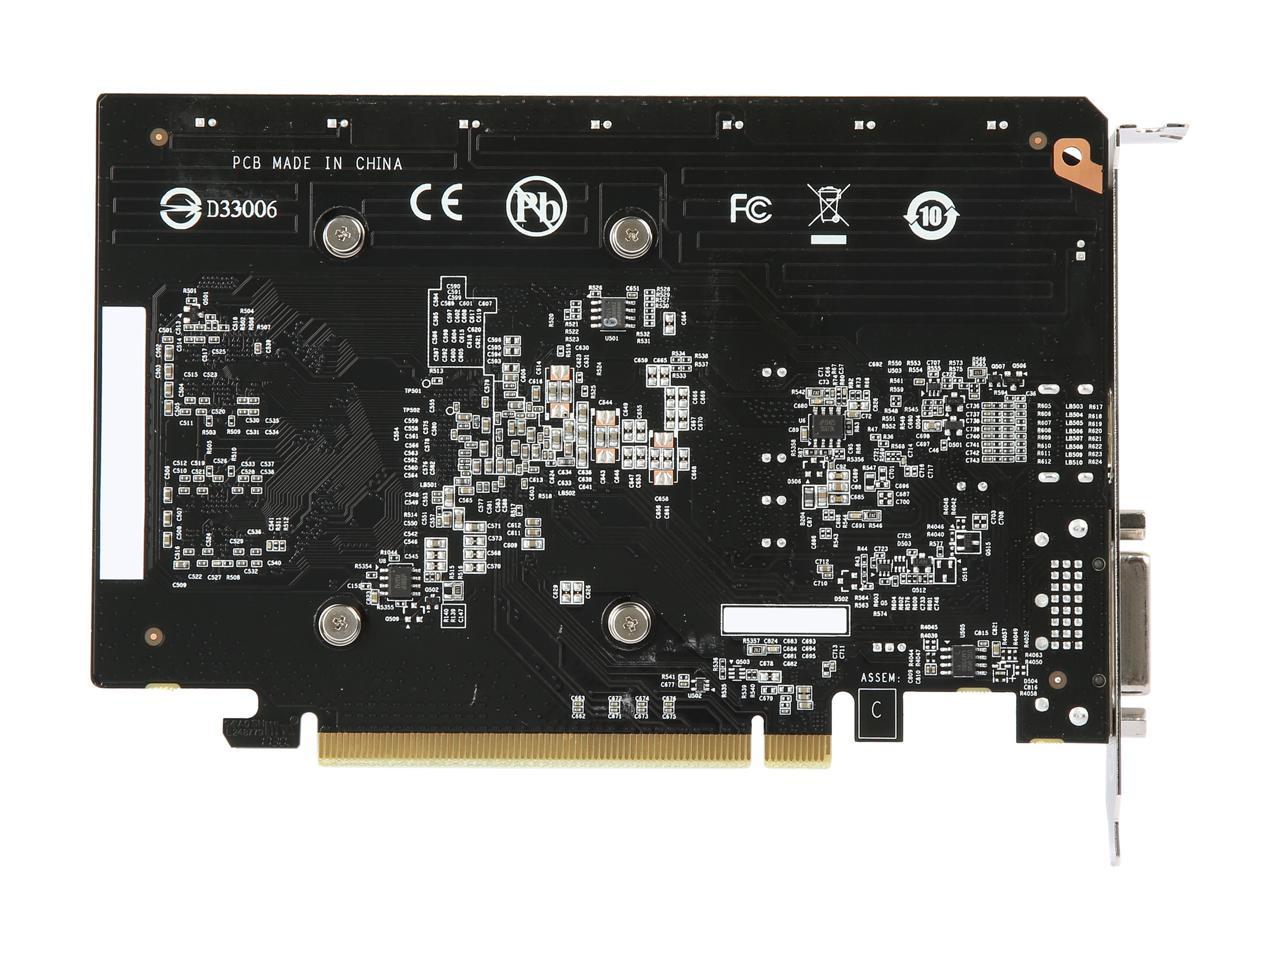 GIGABYTE GeForce GT 1030 DirectX 12 GV-N1030OC-2GI 2GB 64-Bit GDDR5 PCI Express x16 Video Card